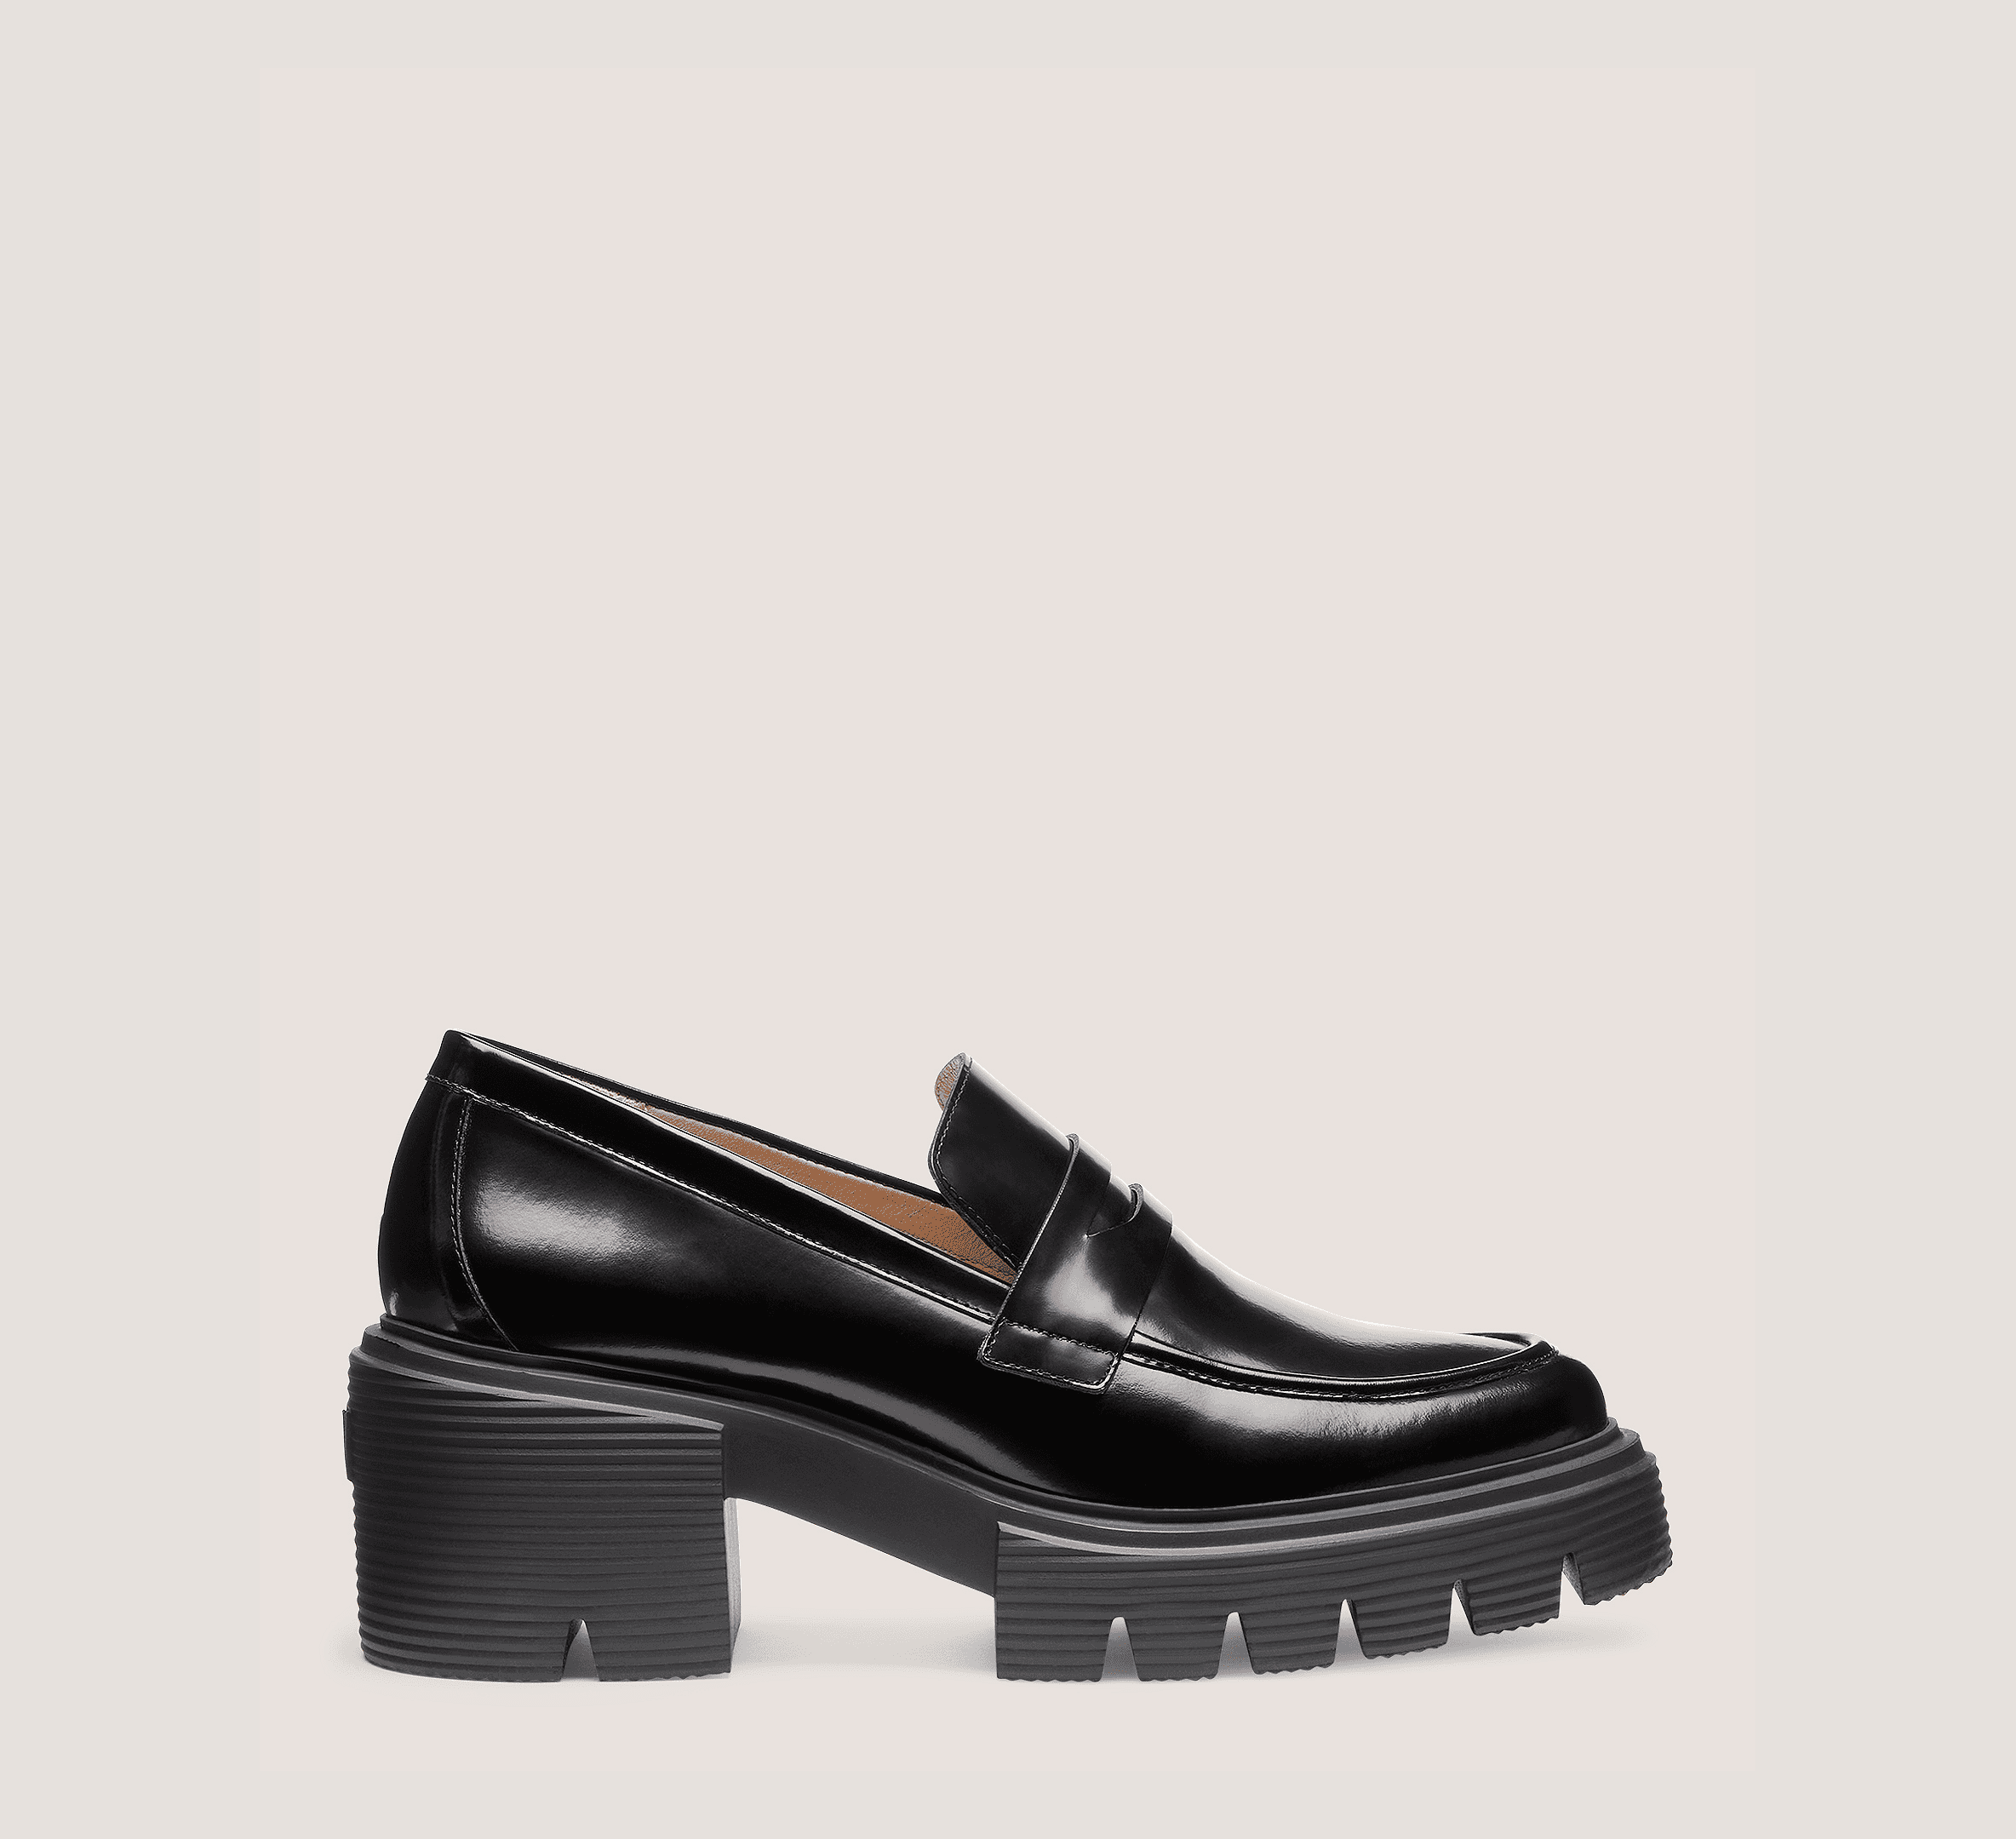 Stuart Weitzman Soho Loafer Flats & Loafers, Black Spazzolato, Size: 5.5 Narrow